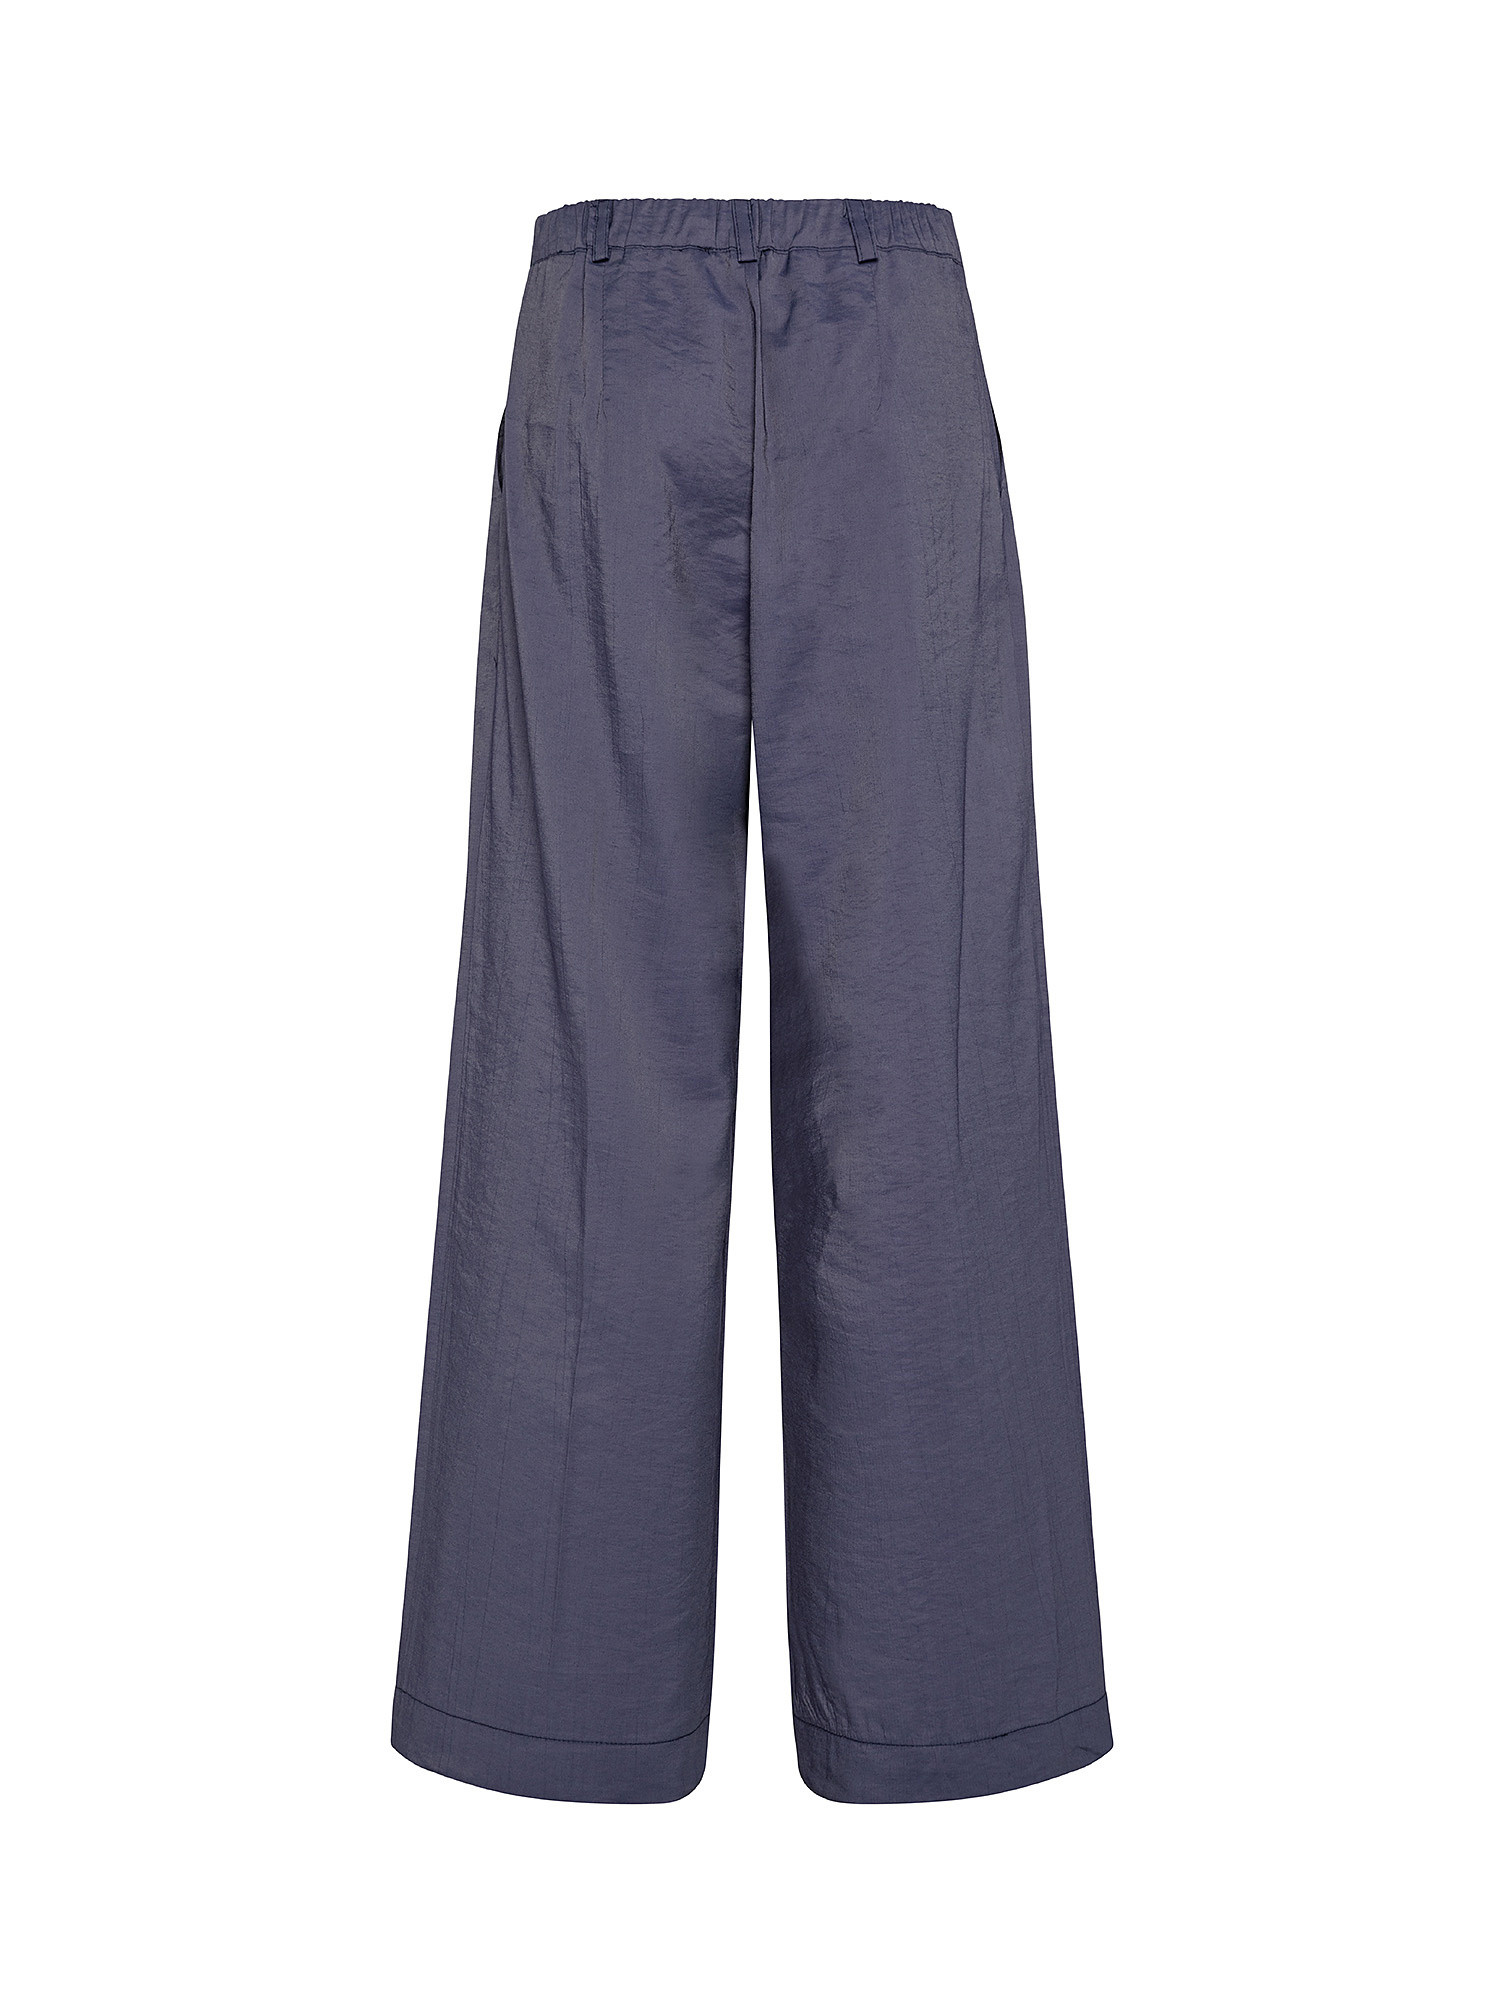 Pantaloni fluidi, Blu, large image number 1